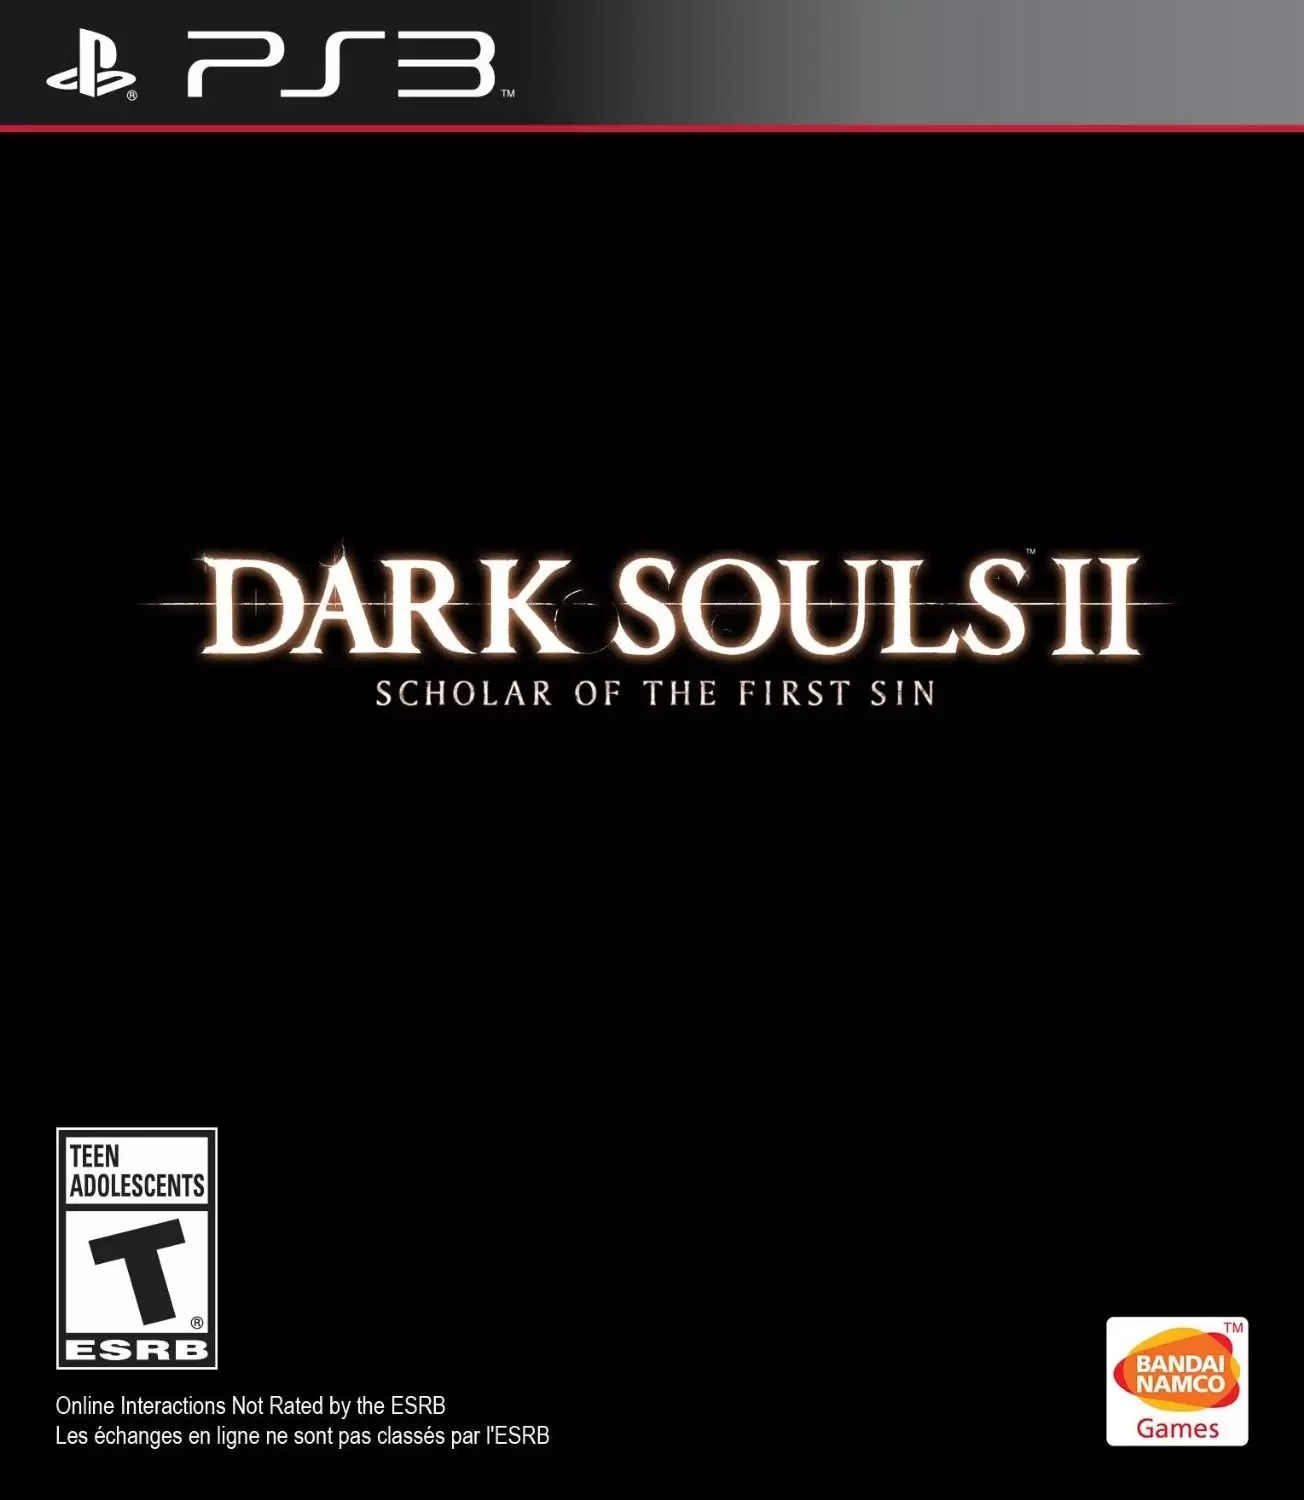 PS3 Games - Dark Souls II: Scholar of the First Sin